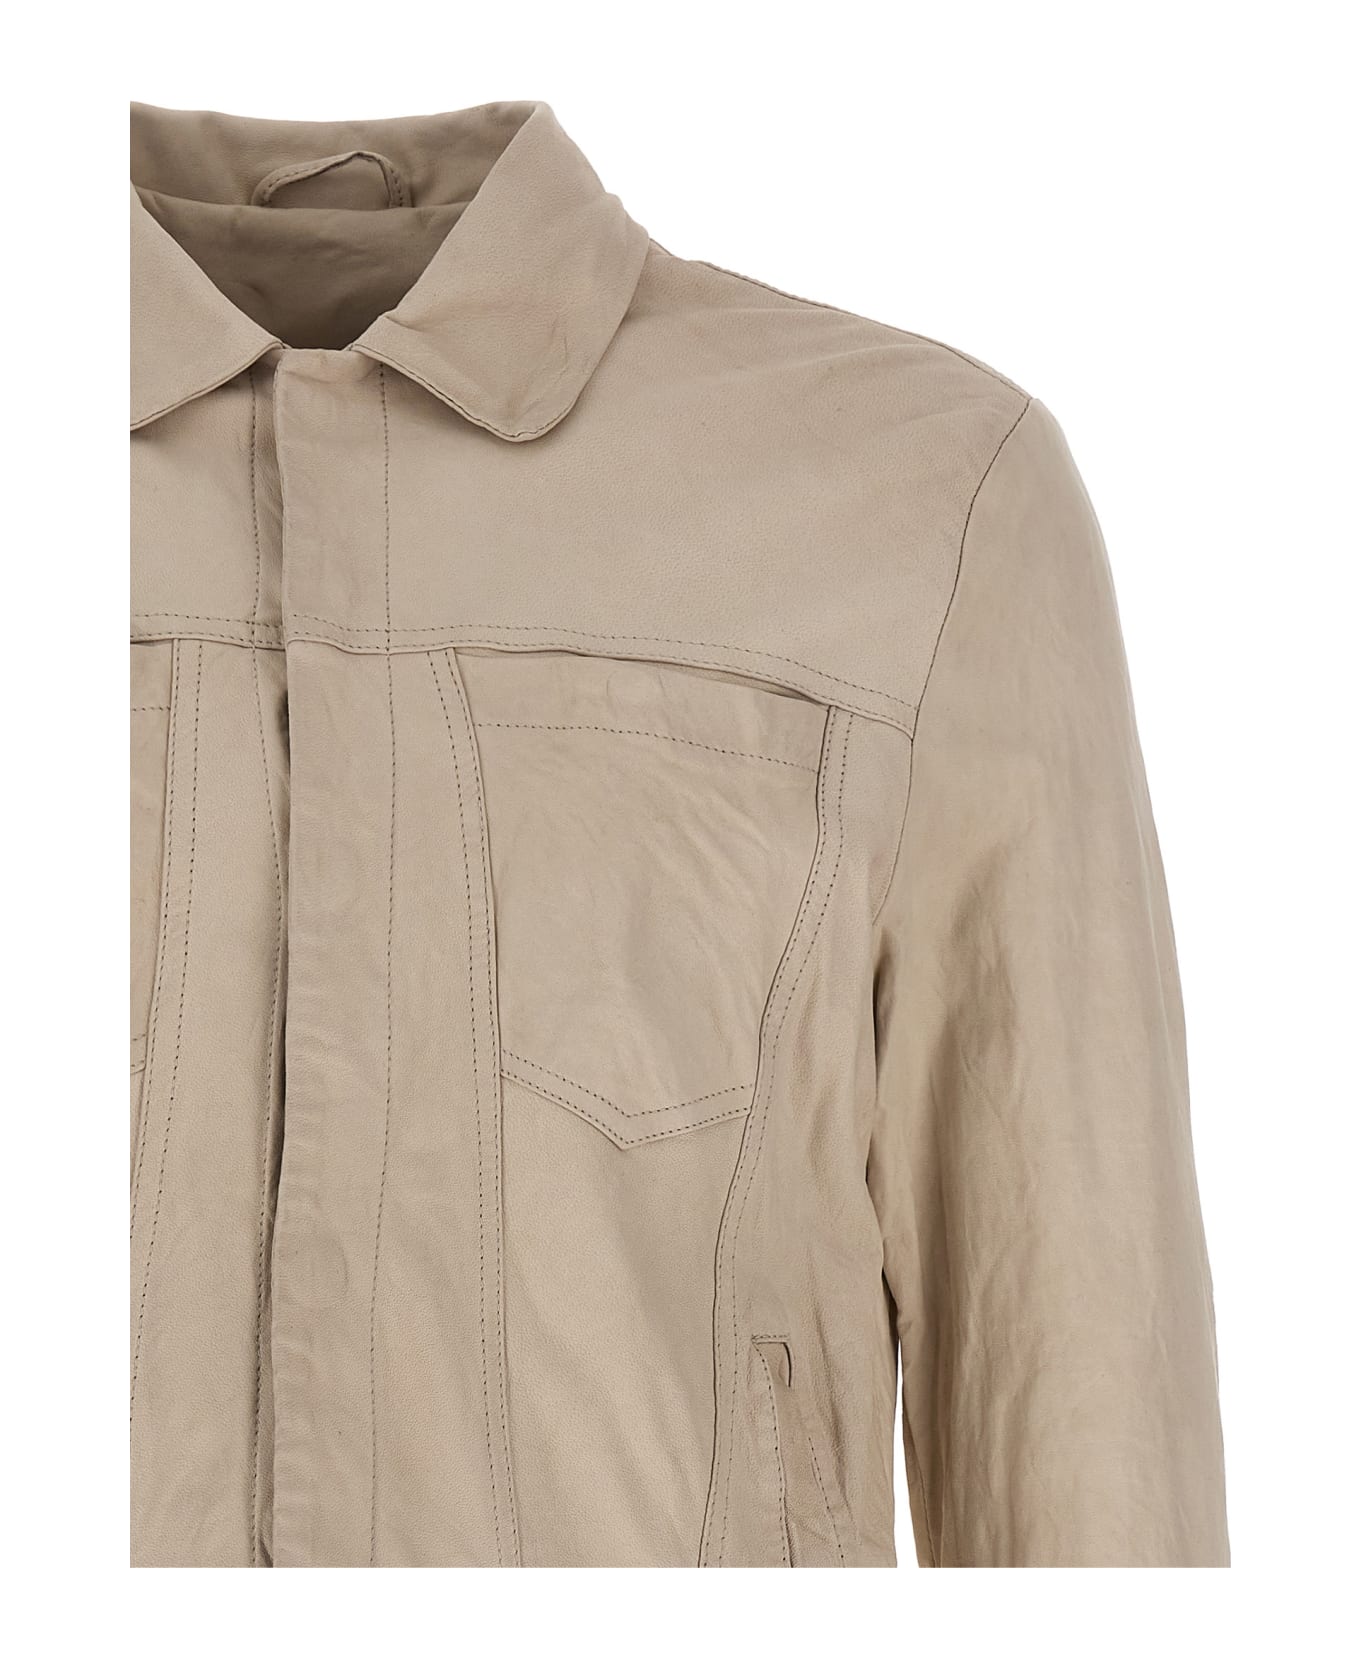 Giorgio Brato 'trucker' Leather Jacket - White ジャケット